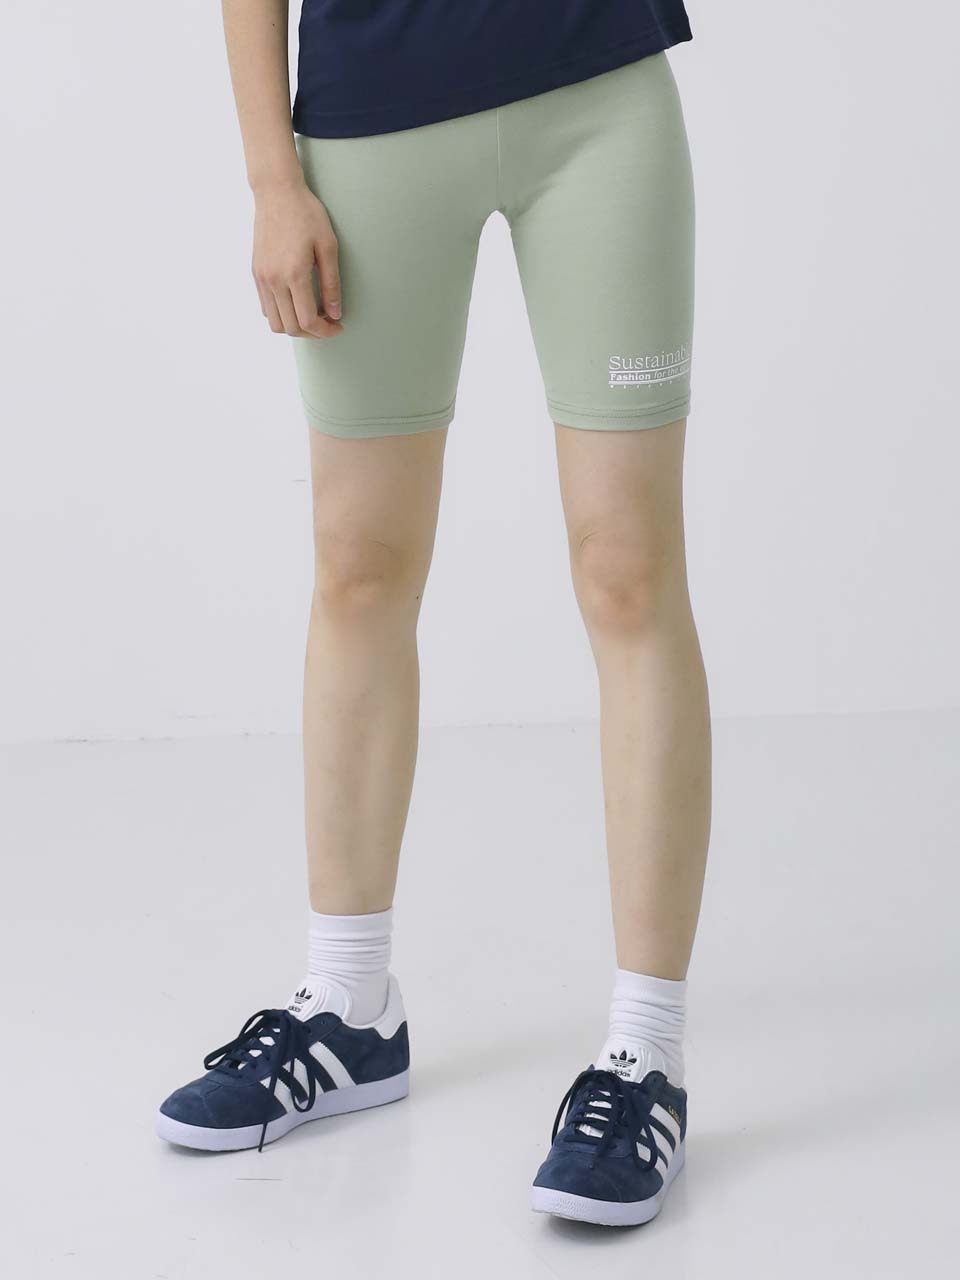 Organic Sustainable Ribbed biker shorts mint